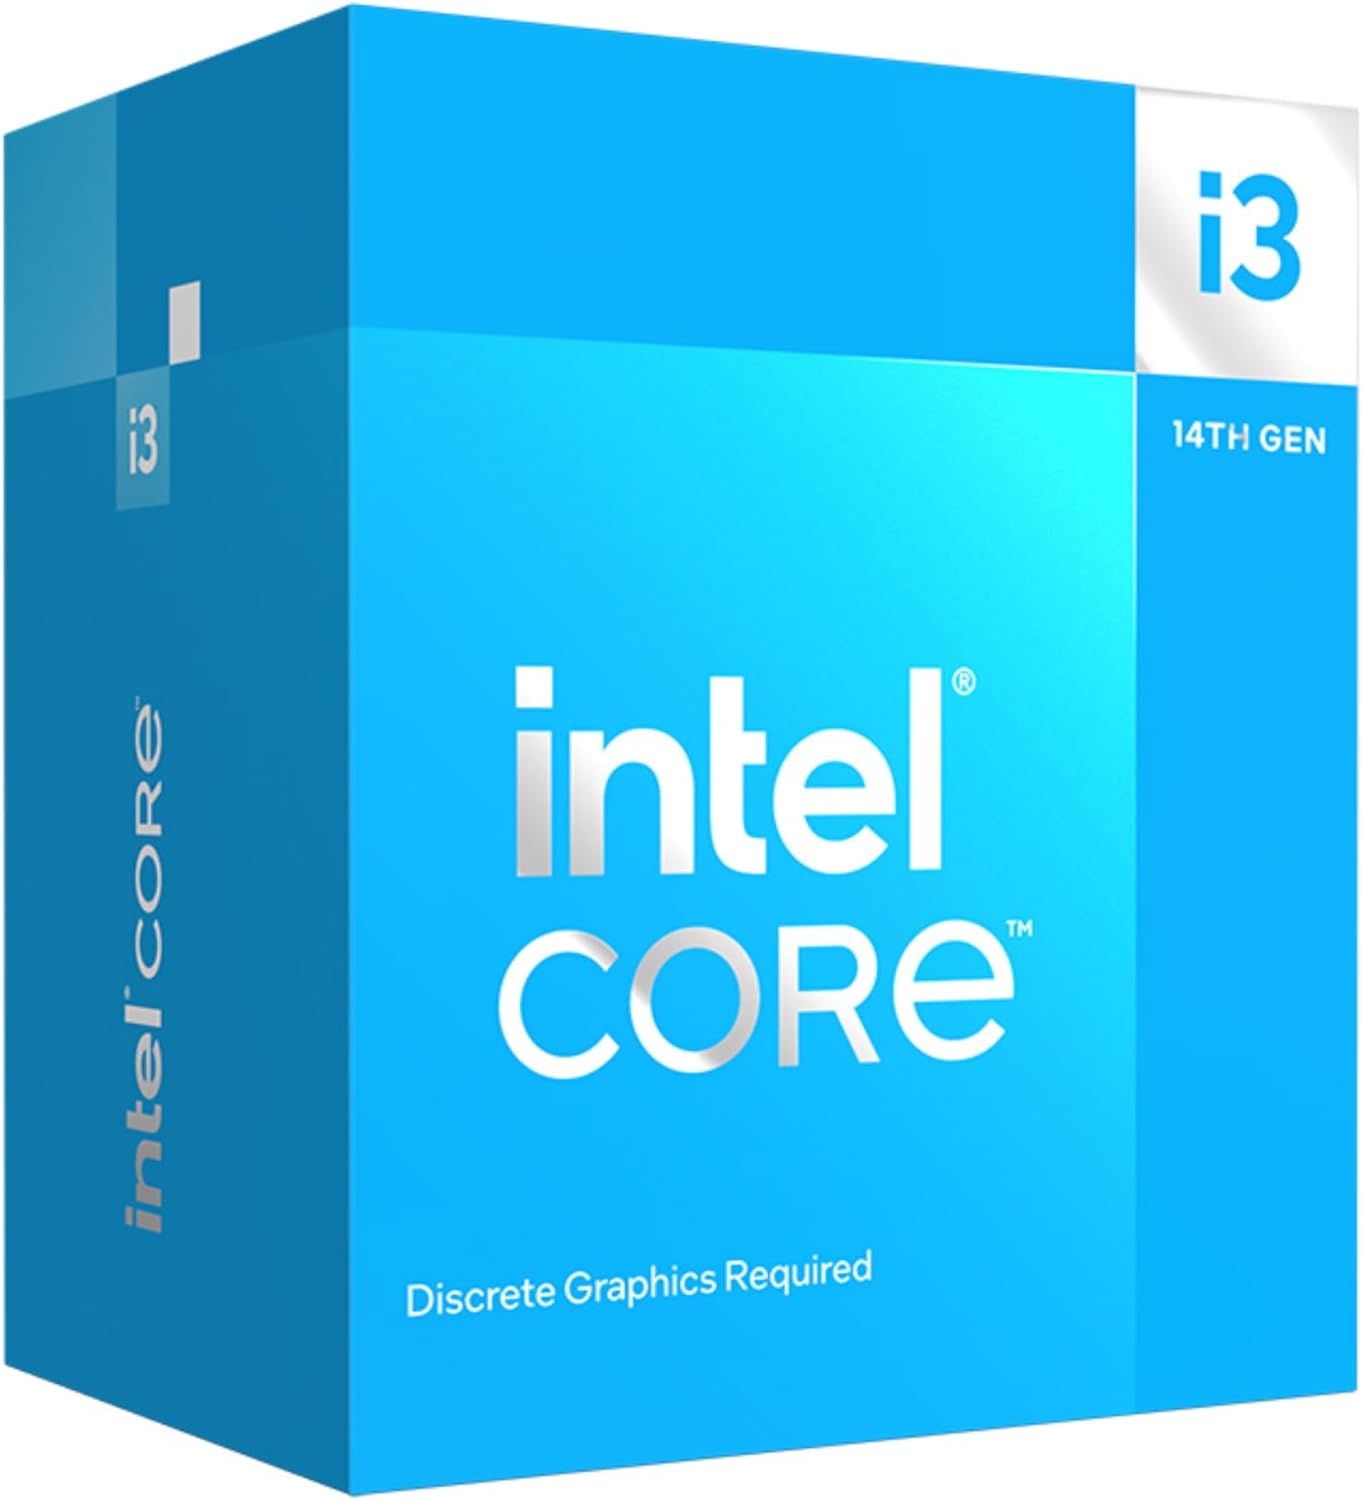 SKU: 0735858547536, Barcode: 735858547536 - Intel Core i3-14100F Desktop Processor, 4 cores up to 4.7 GHz